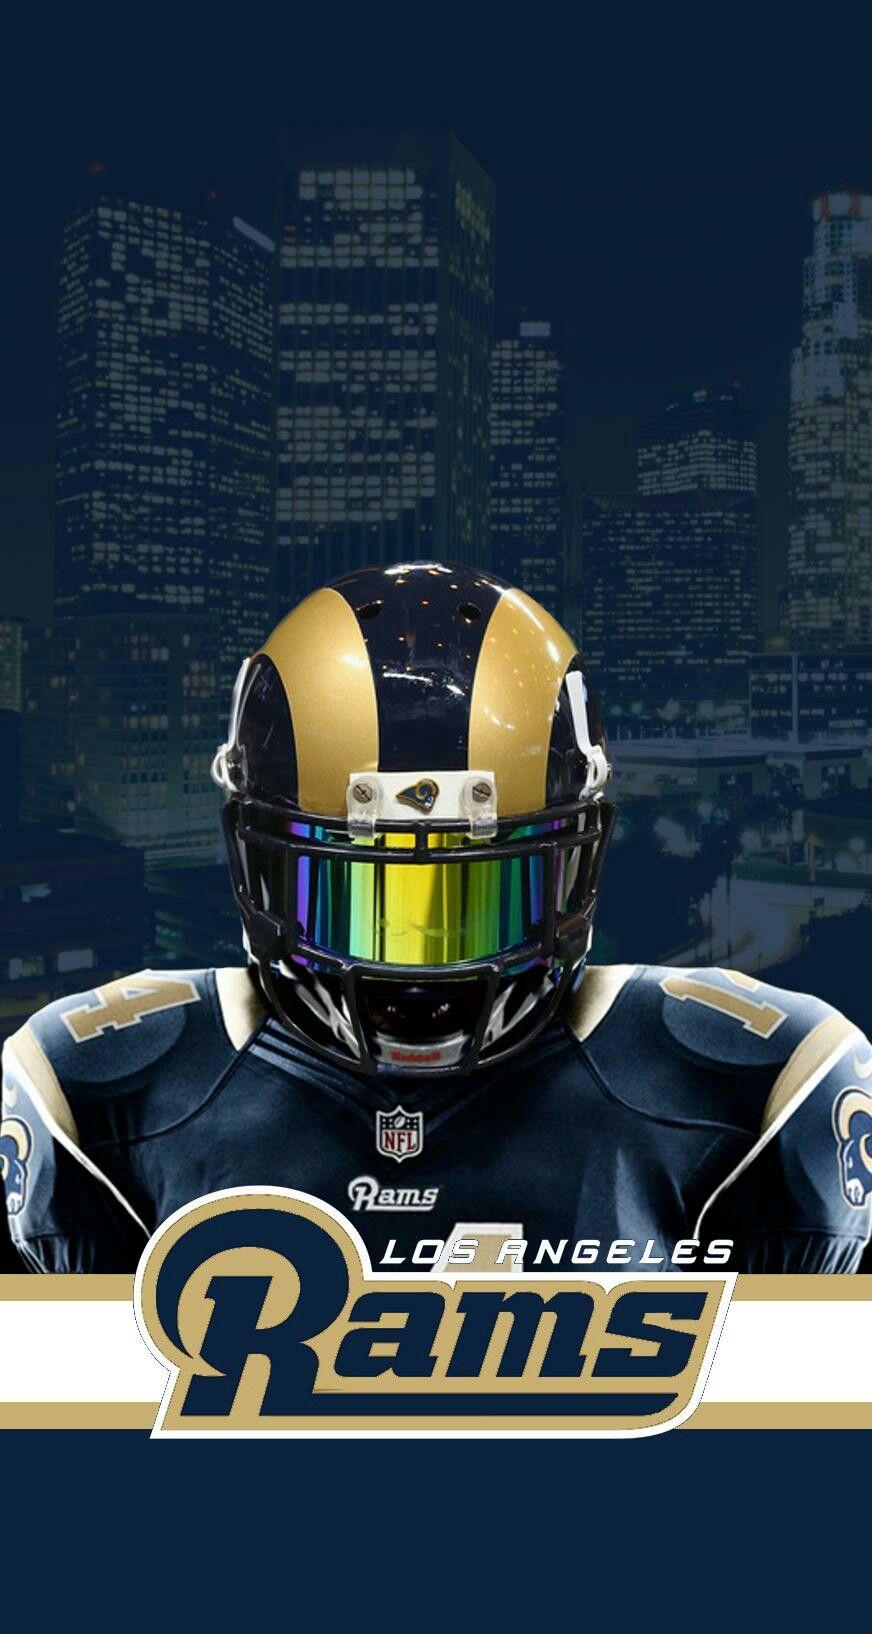 Los Angeles Rams. La rams, Nfl rams, Football helmets